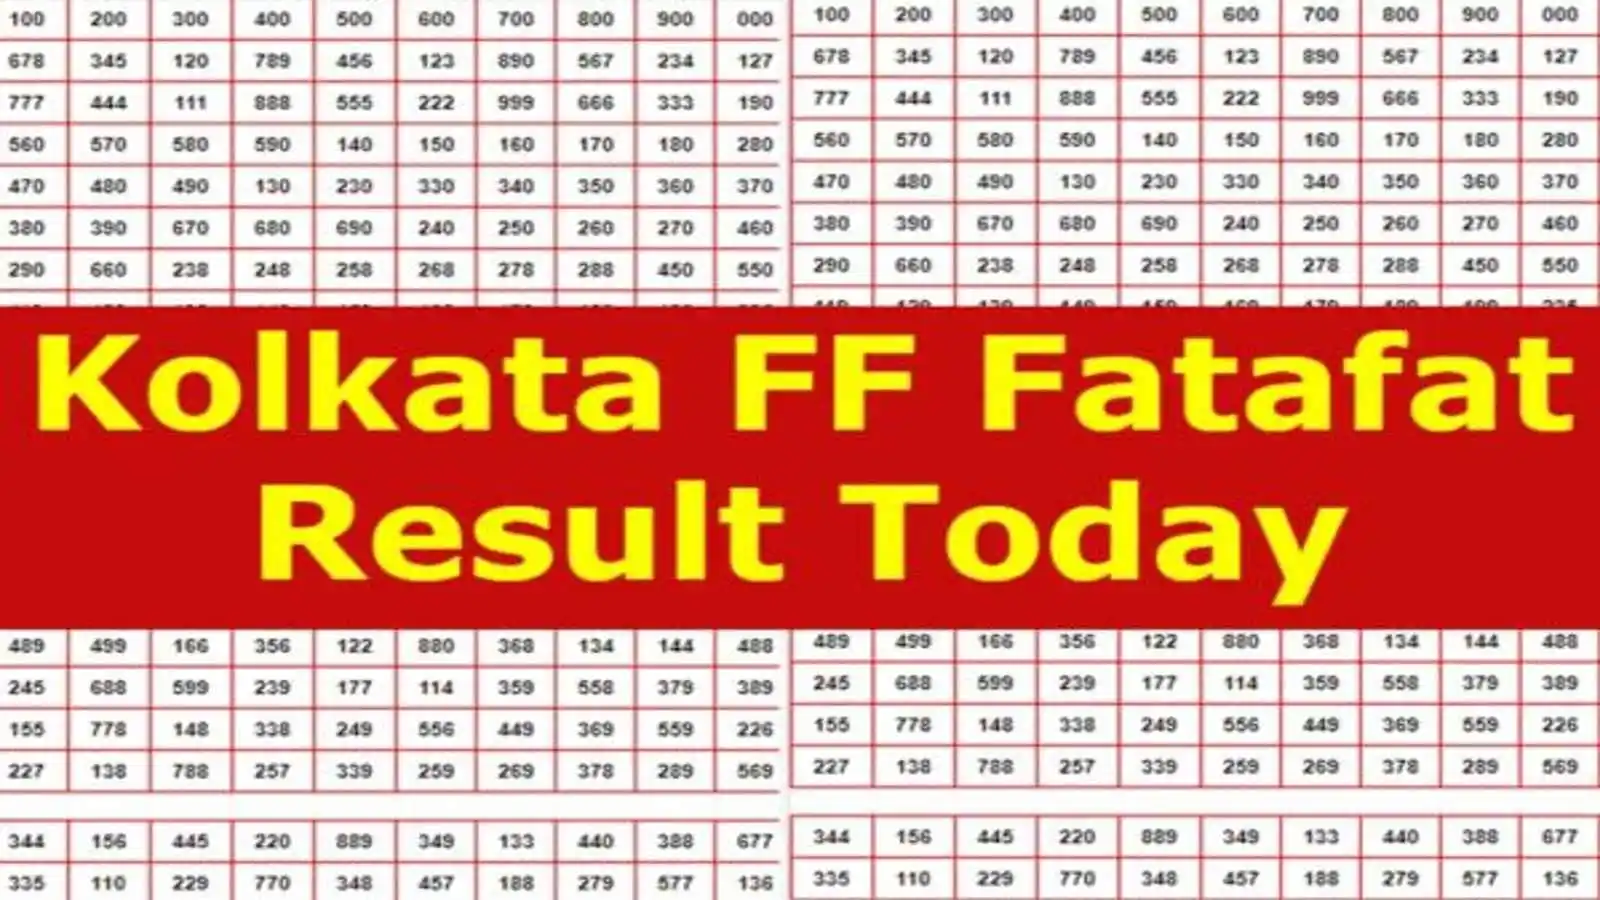 Kolkata FF Fatafat tips and resulte